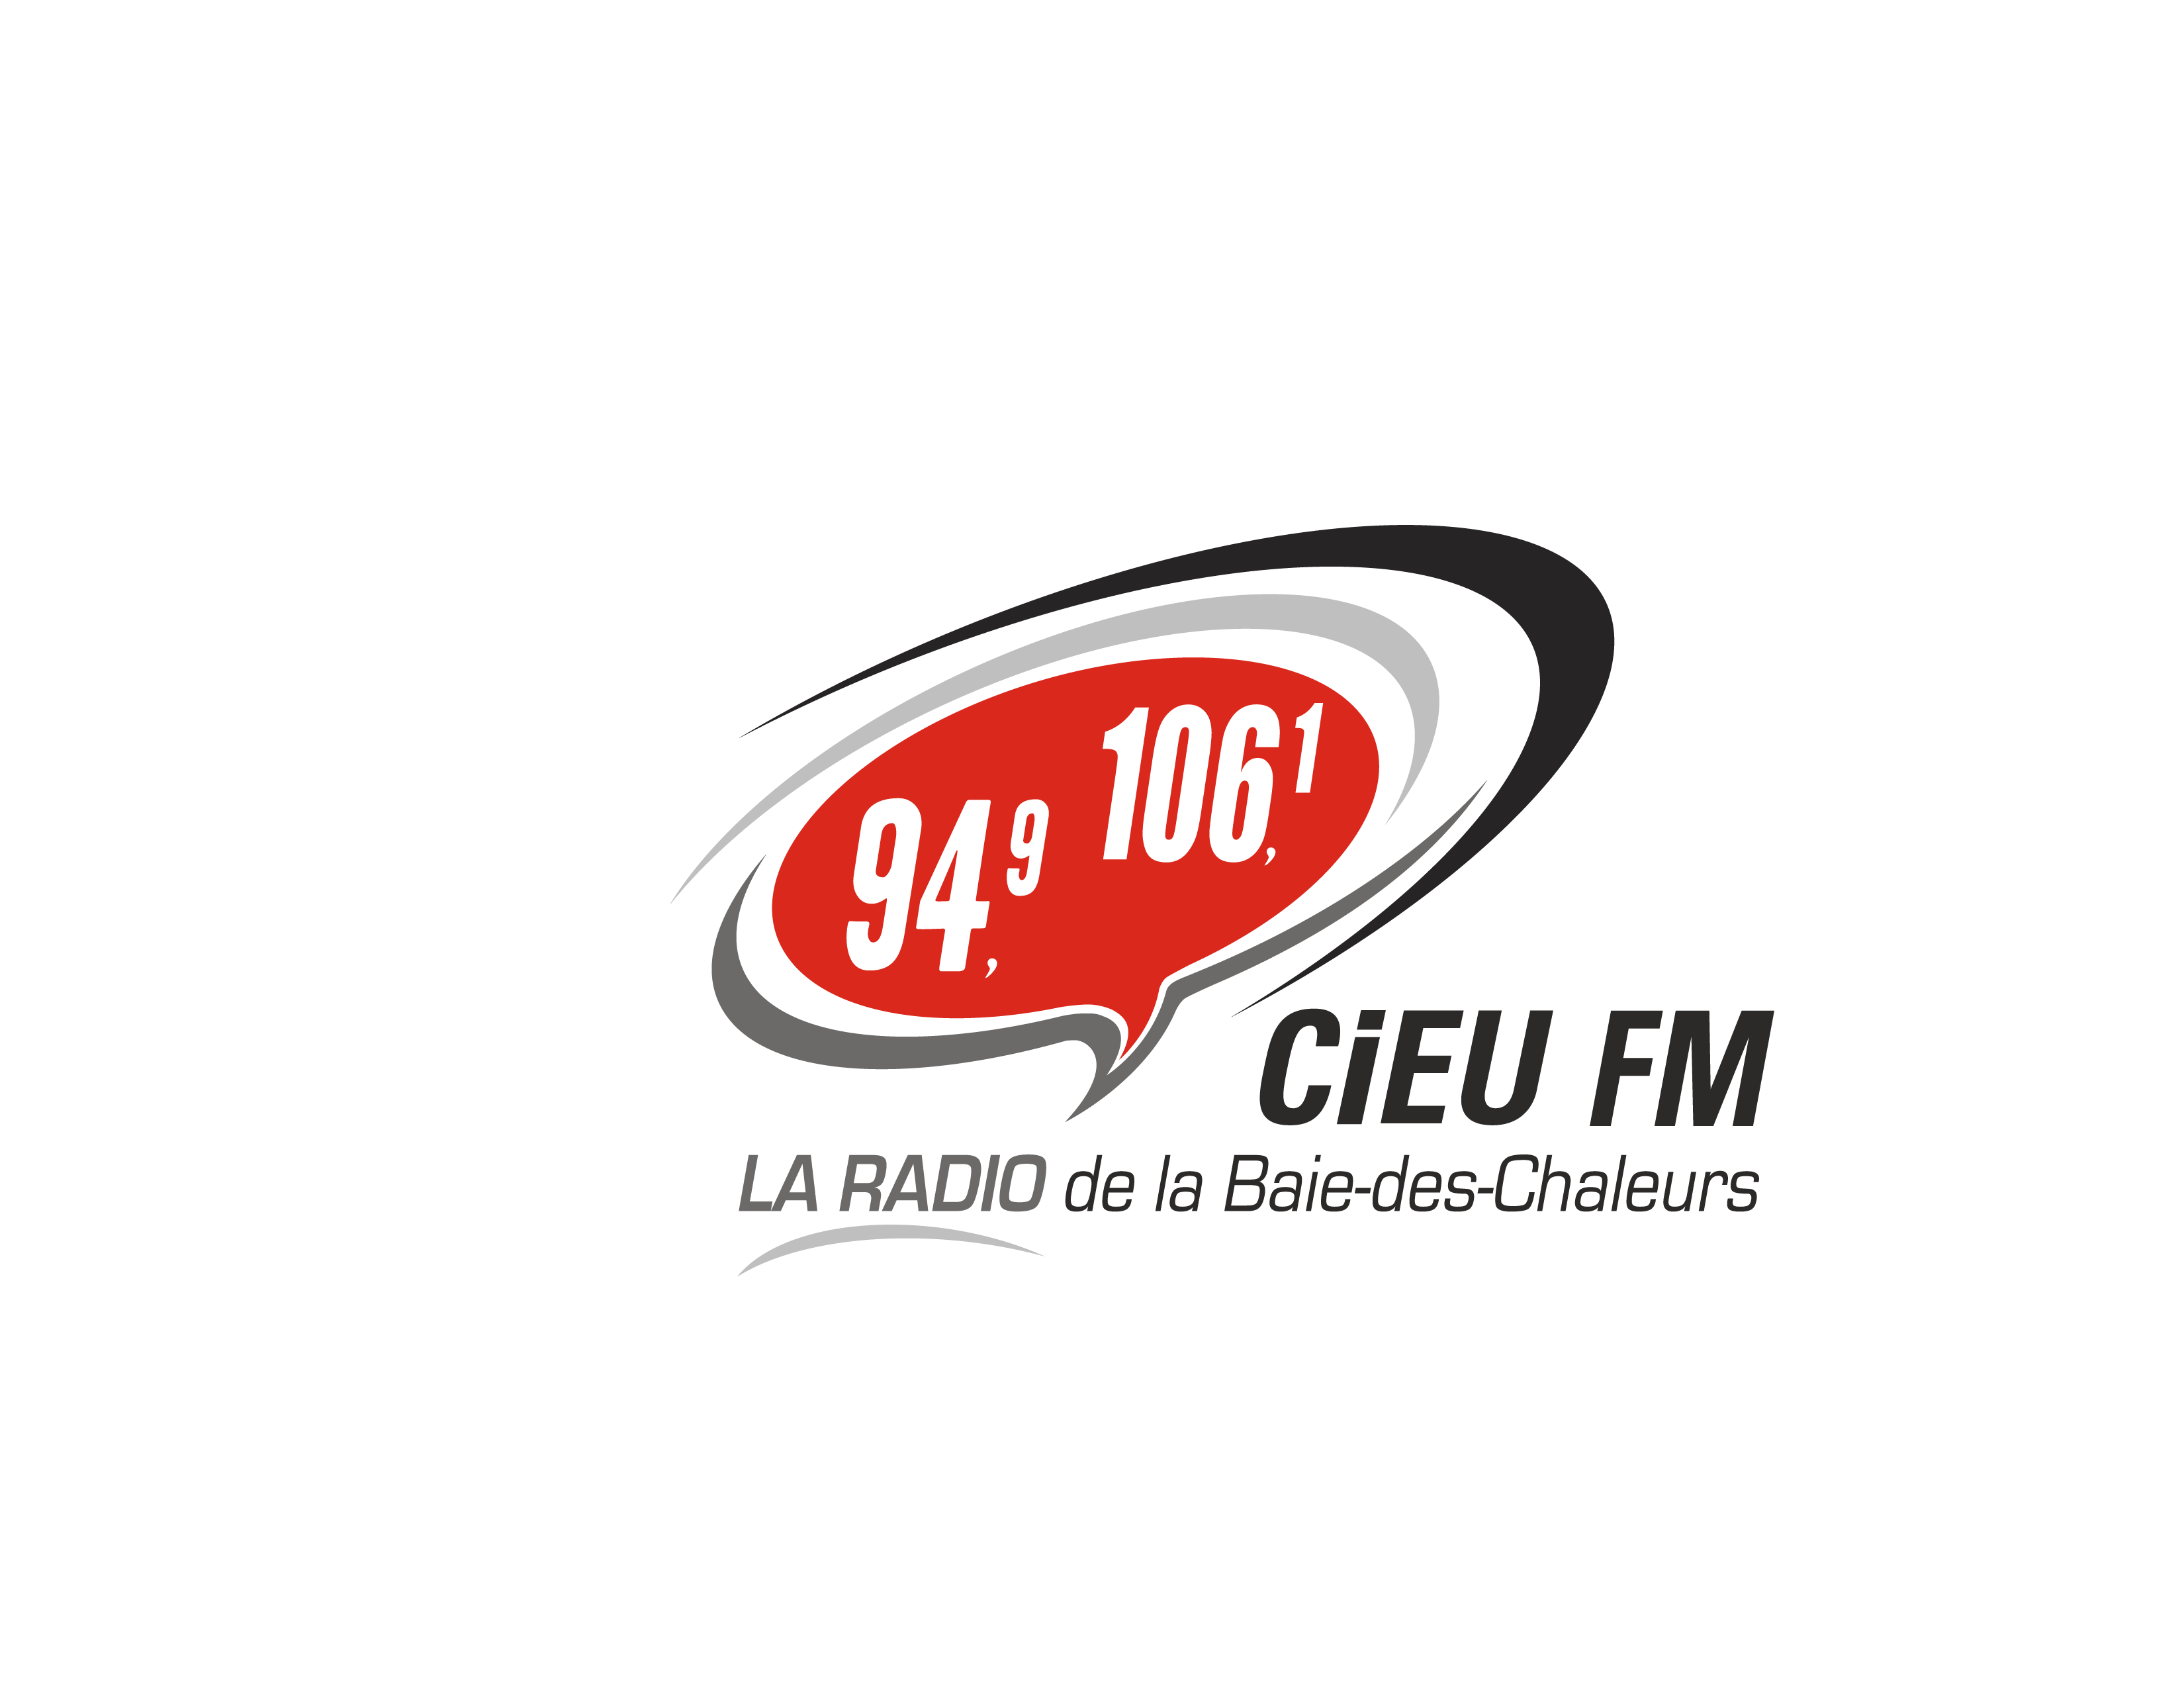 CIEU-FM